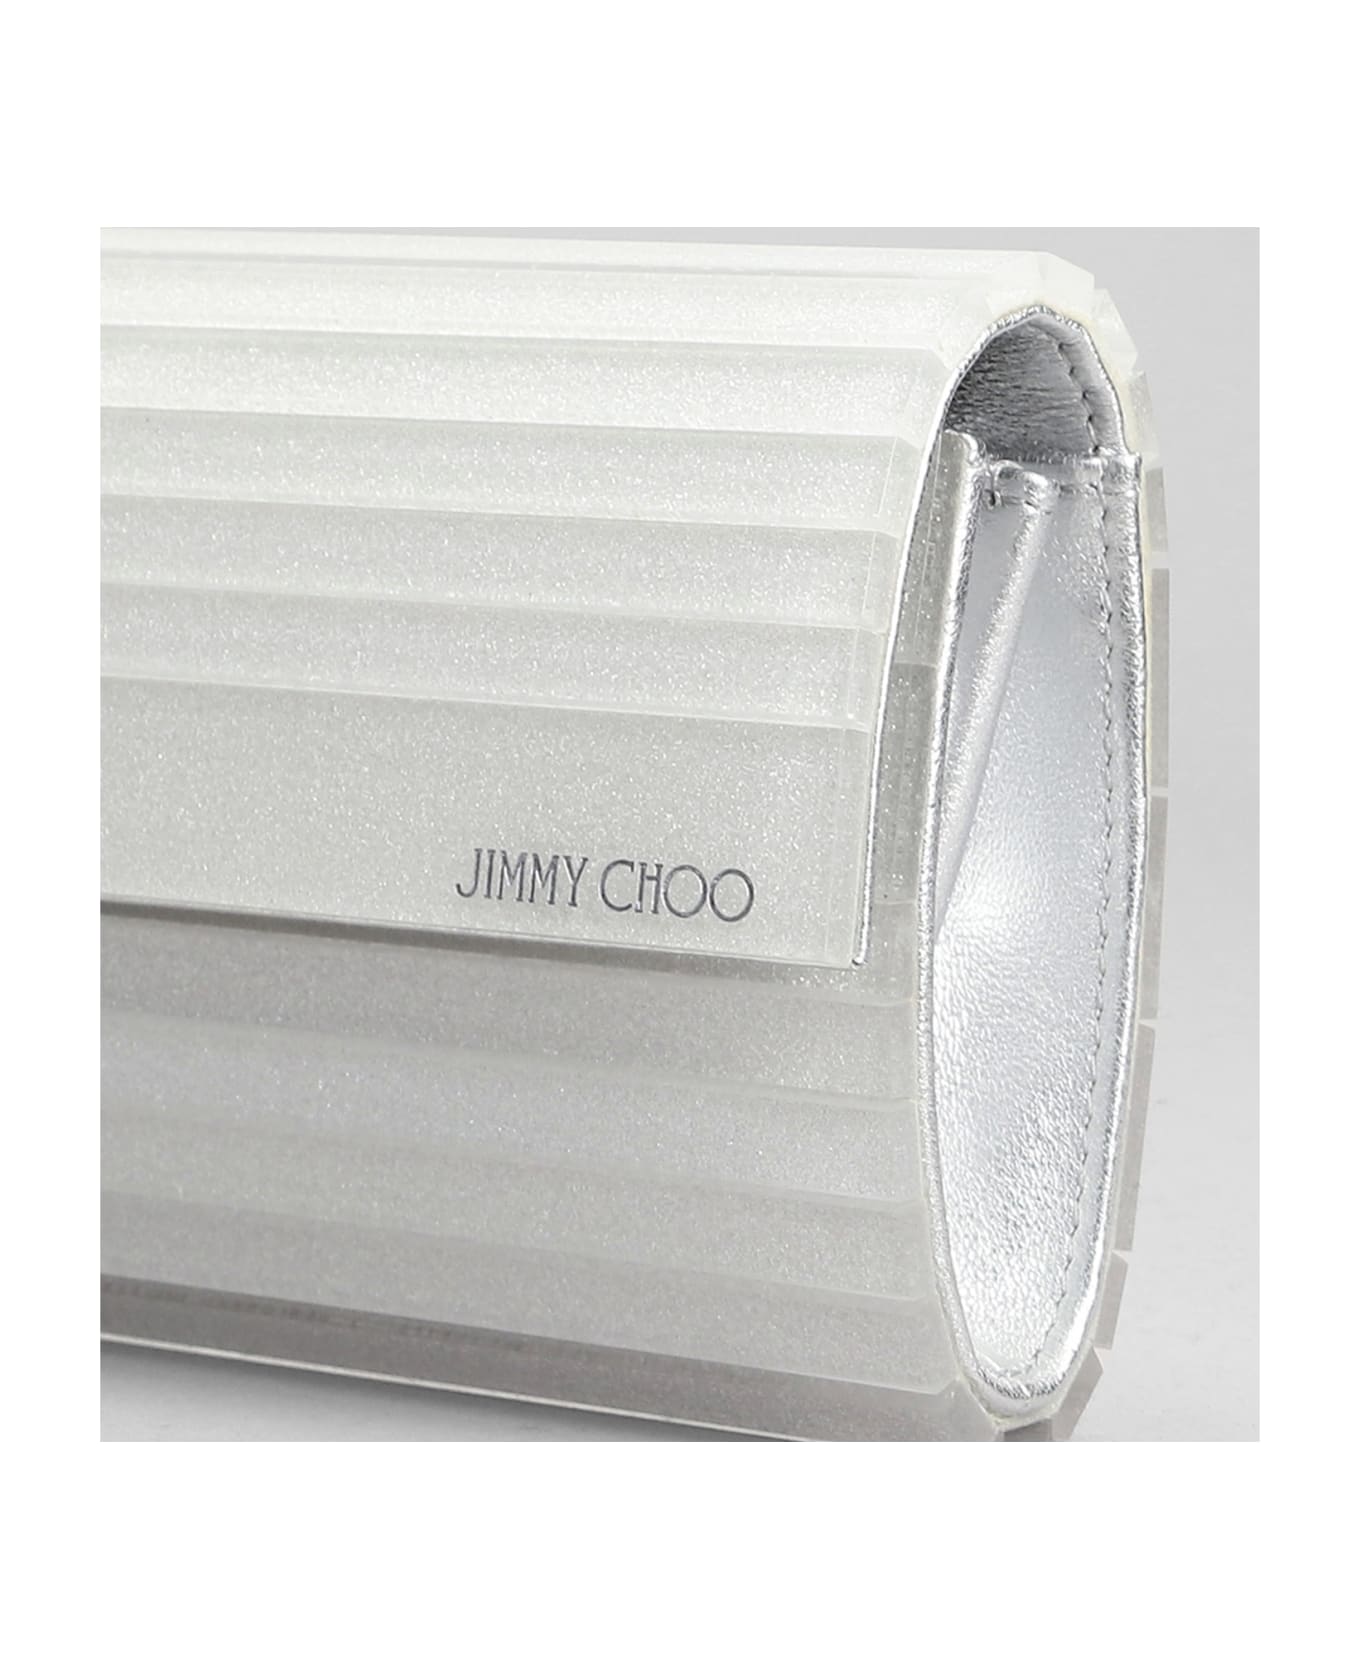 Jimmy Choo Sweetie Clutch In White Acrylic - white